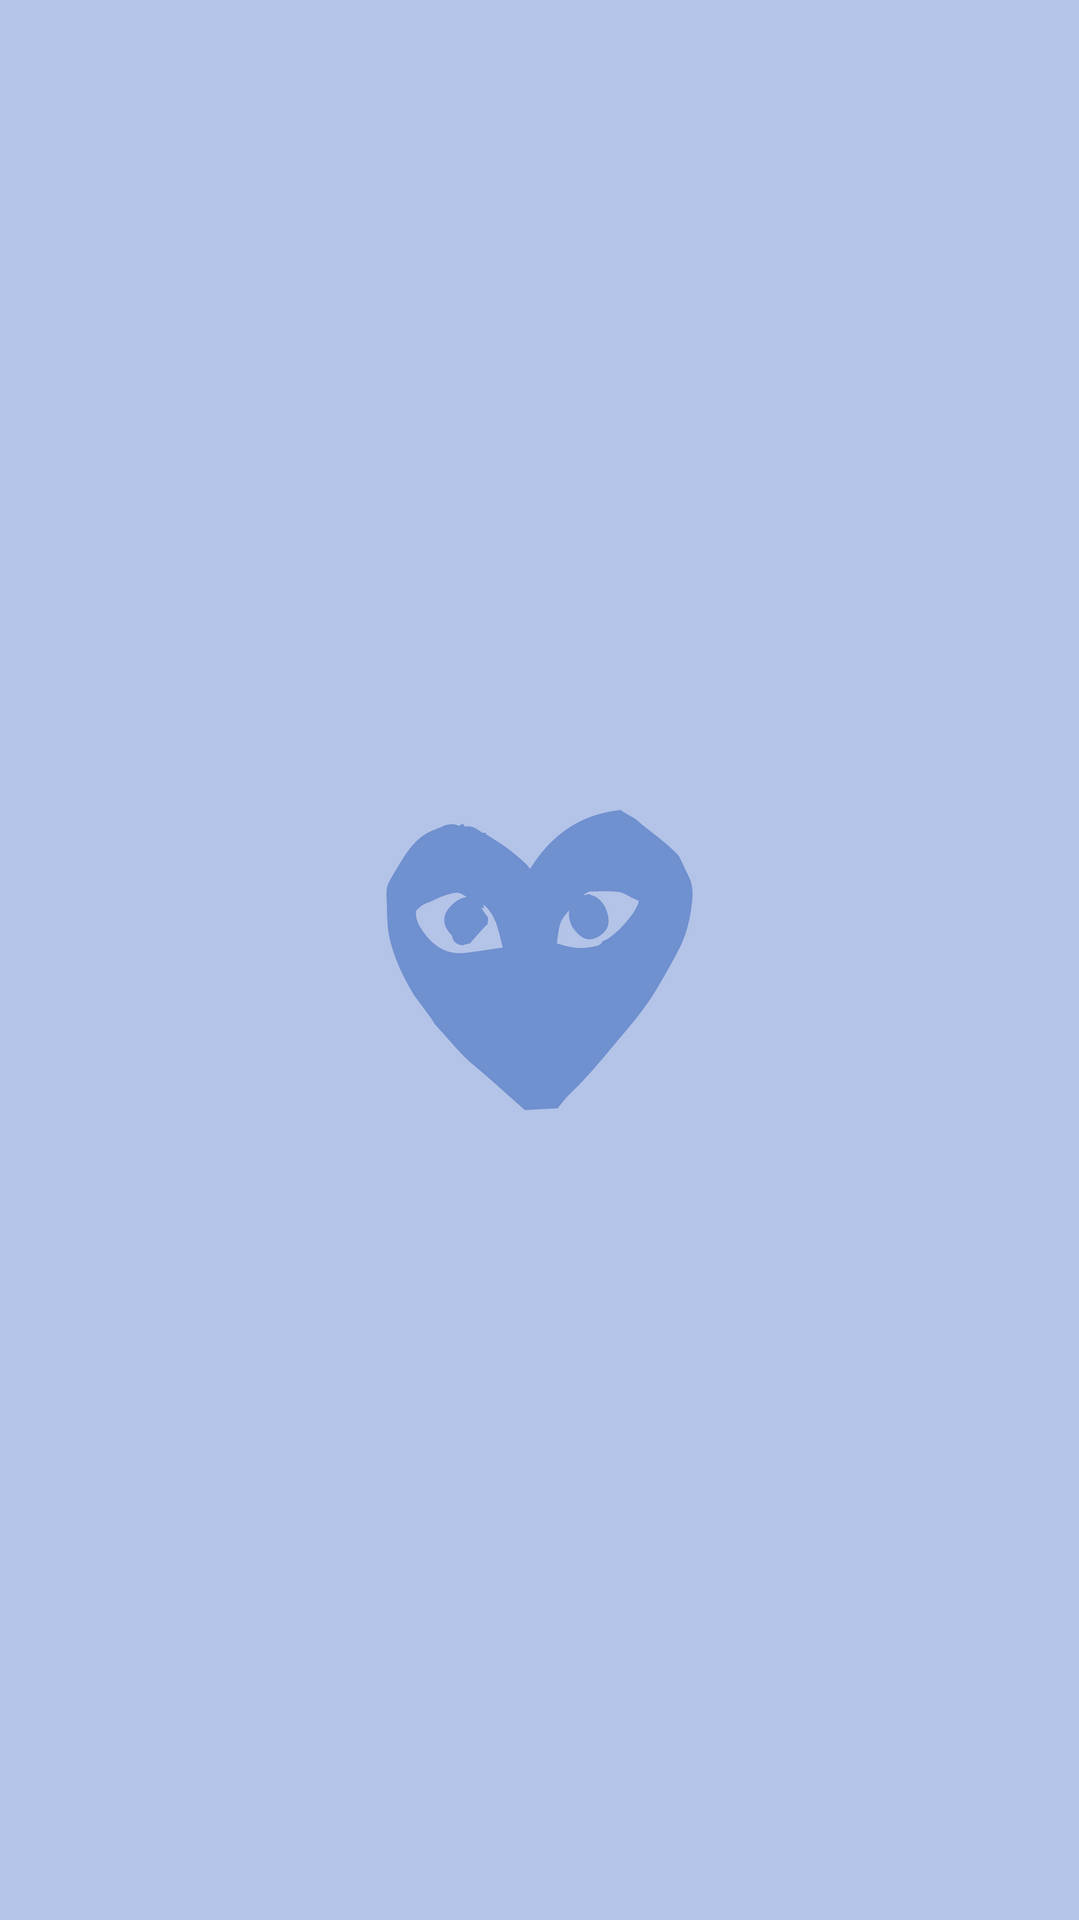 Pastel Blue Cdg Logo Wallpaper